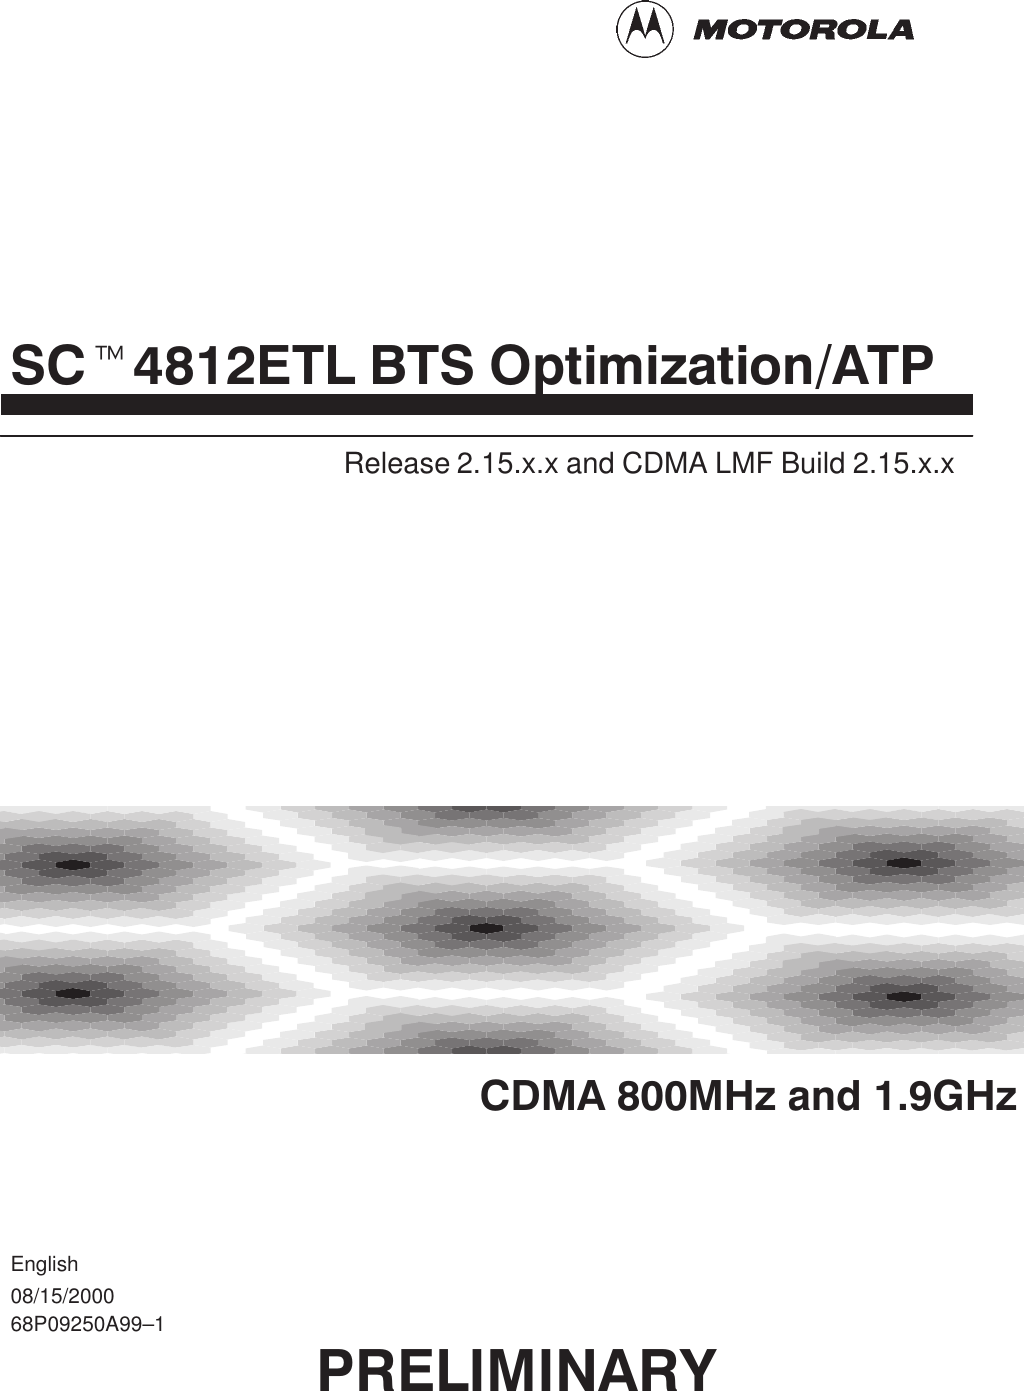 PRELIMINARYSCt4812ETL BTS Optimization/ATPCDMA 800MHz and 1.9GHzRelease 2.15.x.x and CDMA LMF Build 2.15.x.x68P09250A99–1English08/15/2000